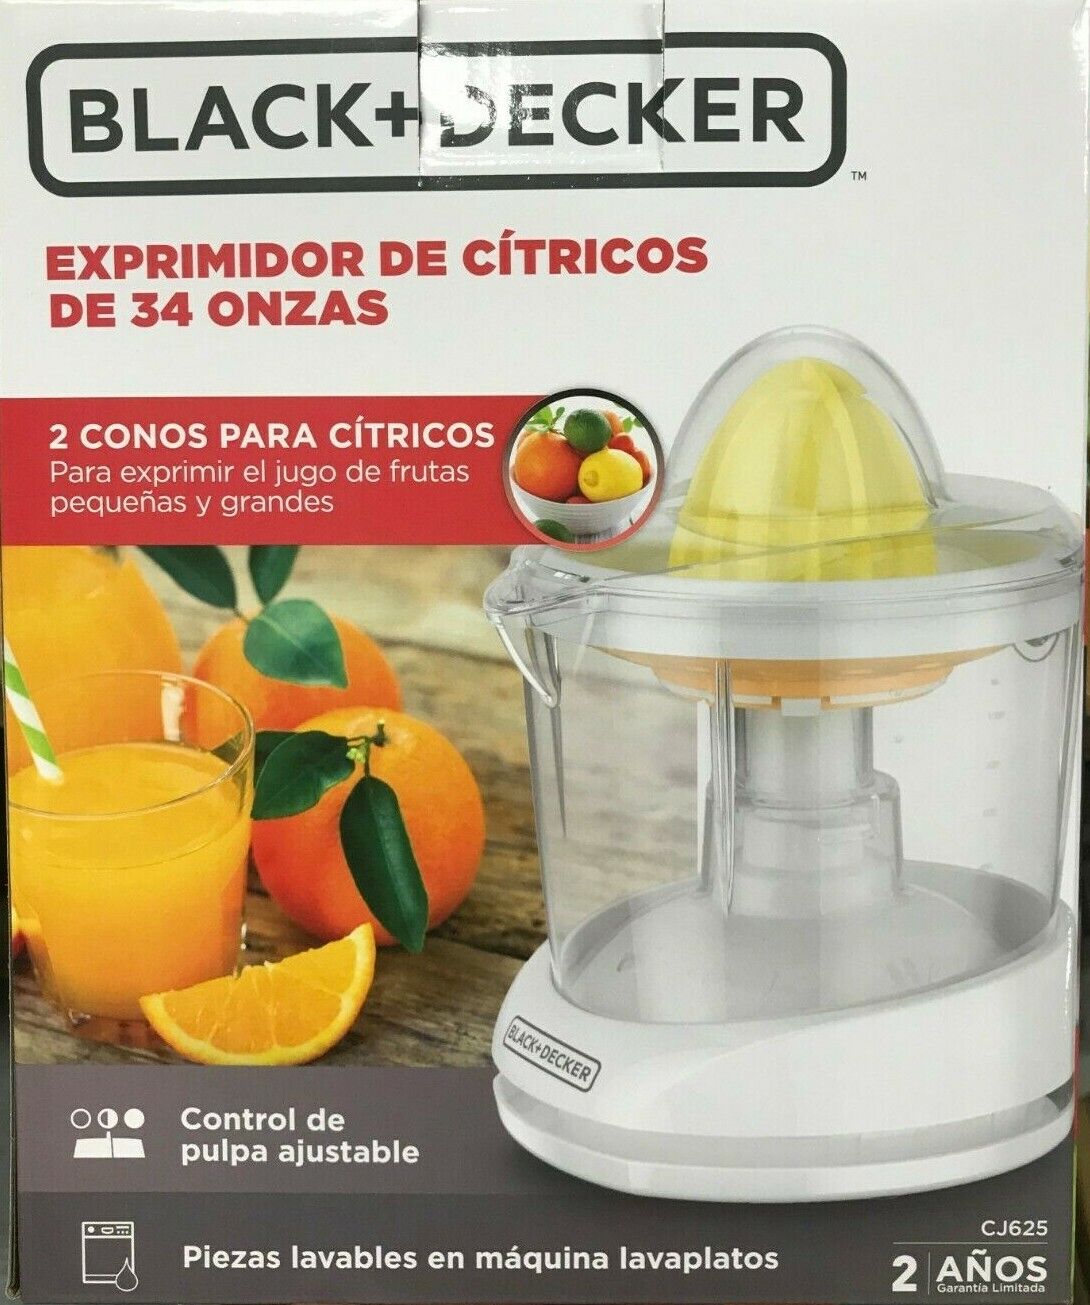 Black + Decker Citrus Juicer 